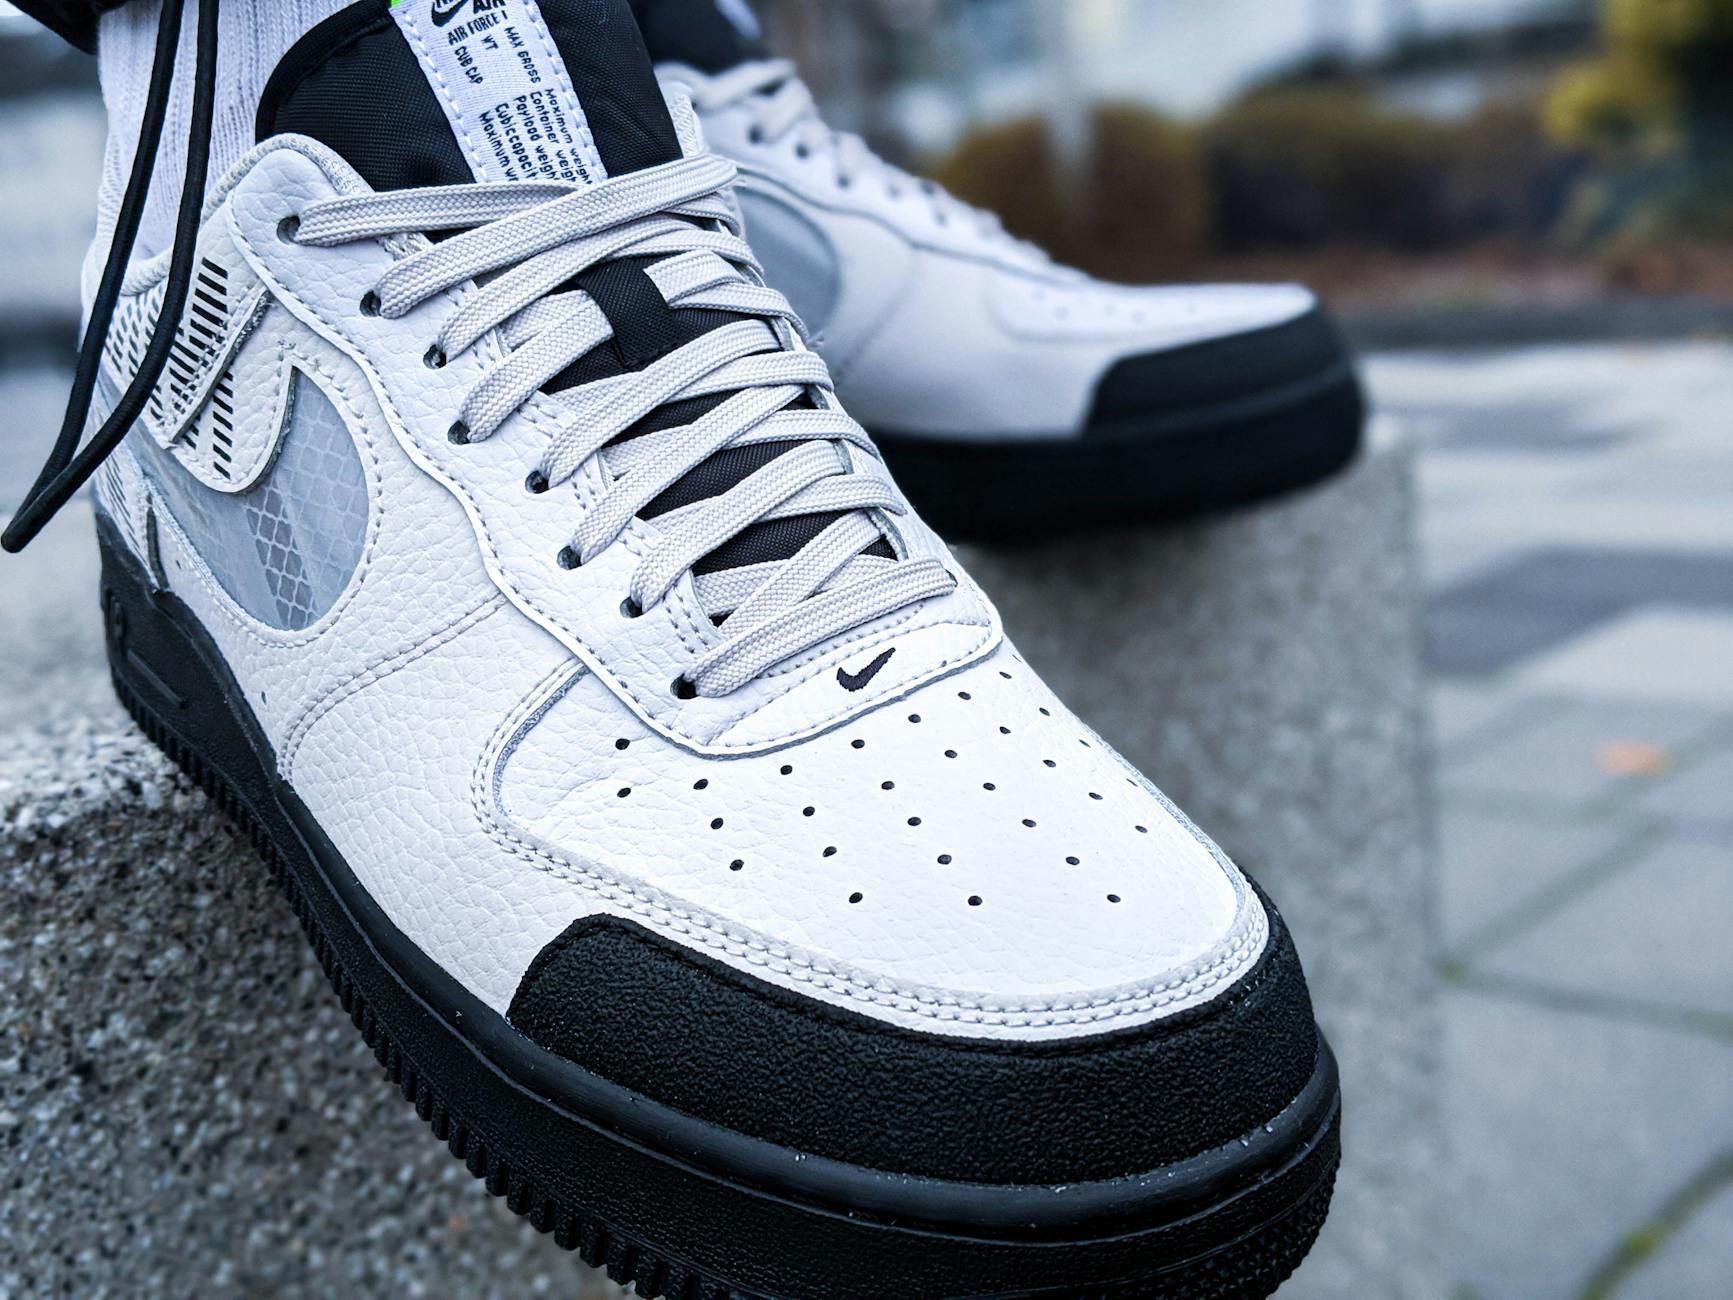 White and Black Nike Air Jordan 1 Shoes · Free Stock Photo